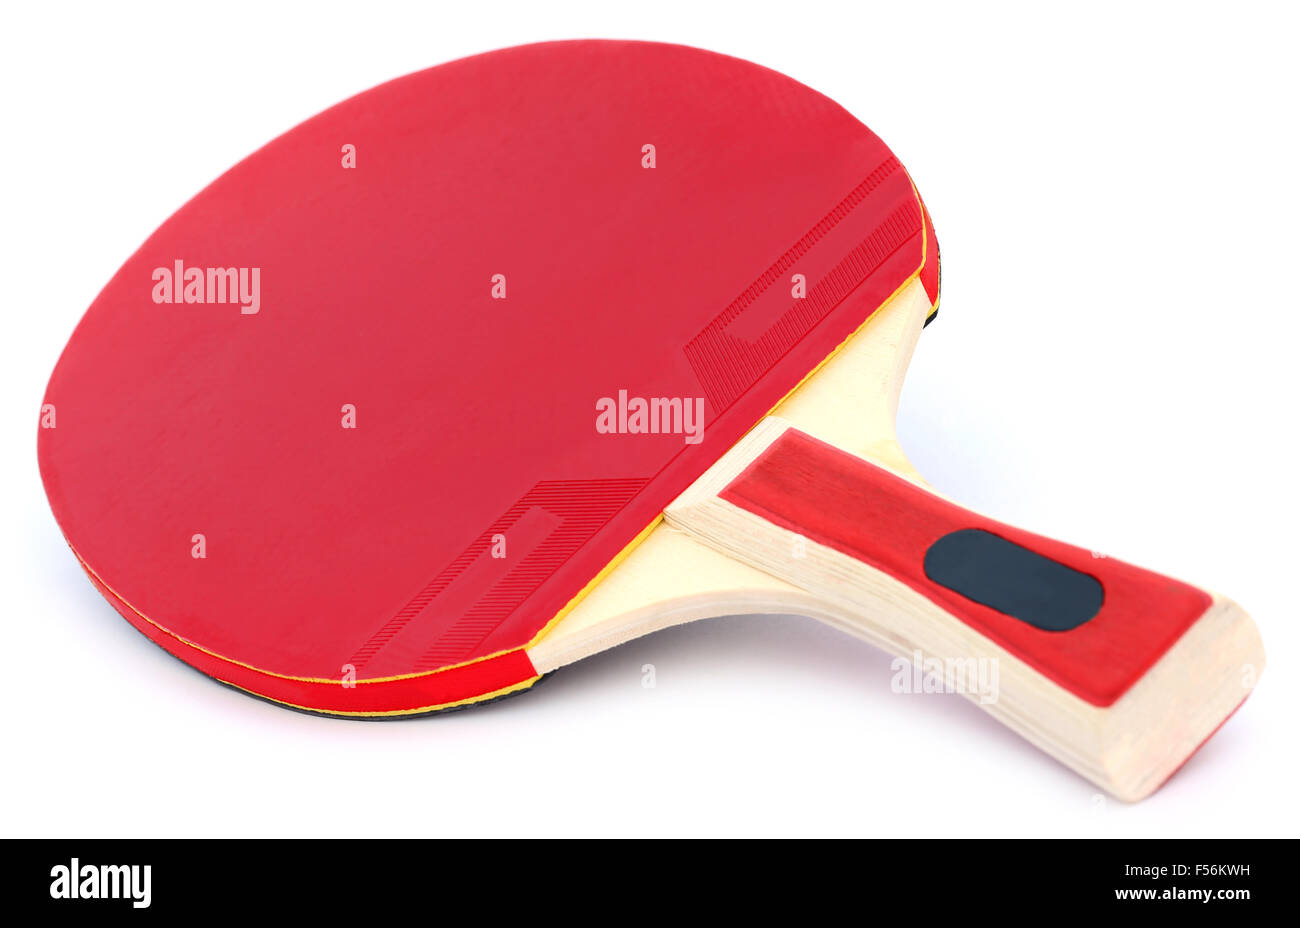 Table tennis bat over white background Stock Photo